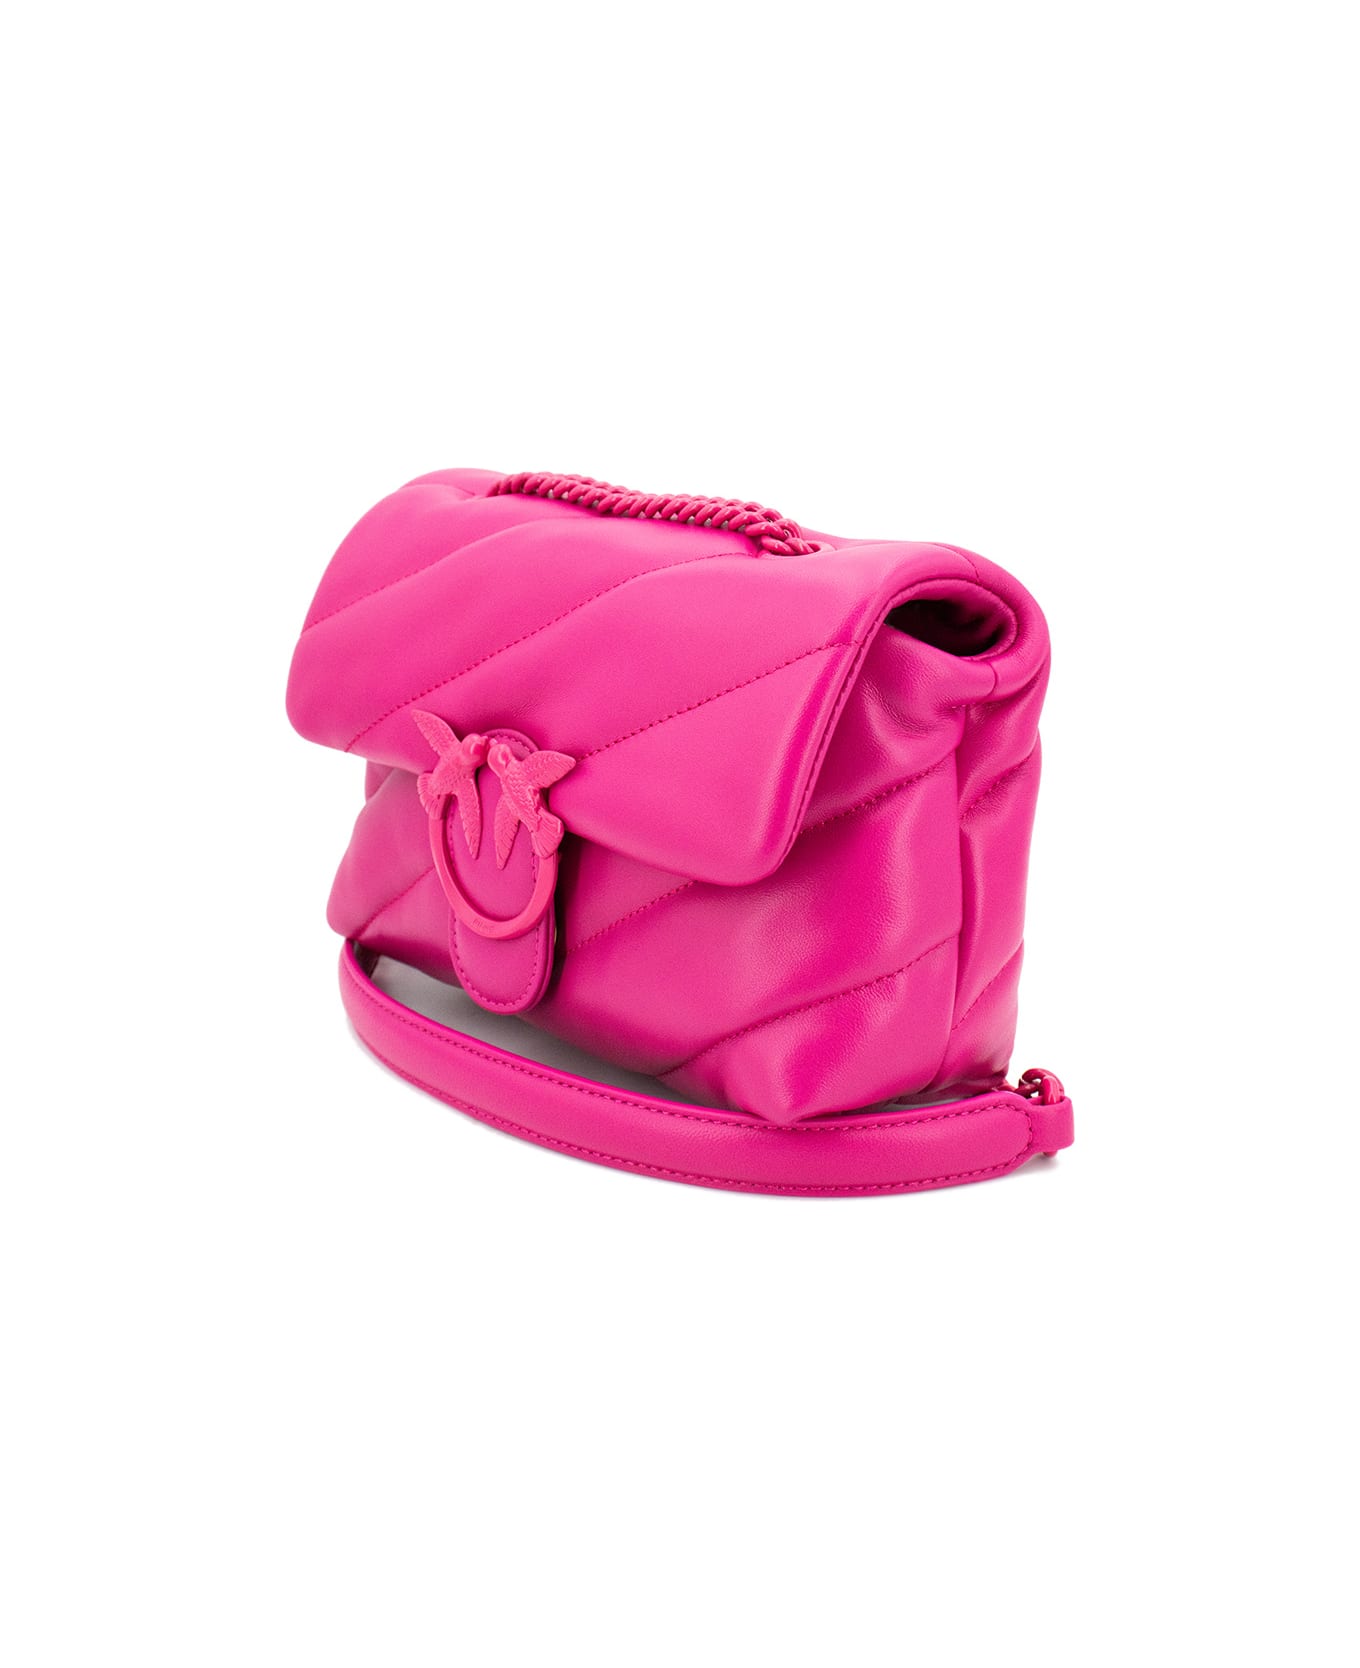 Pinko Mini Love Bag In Quilted Nappa Leather - B Pinko Pink